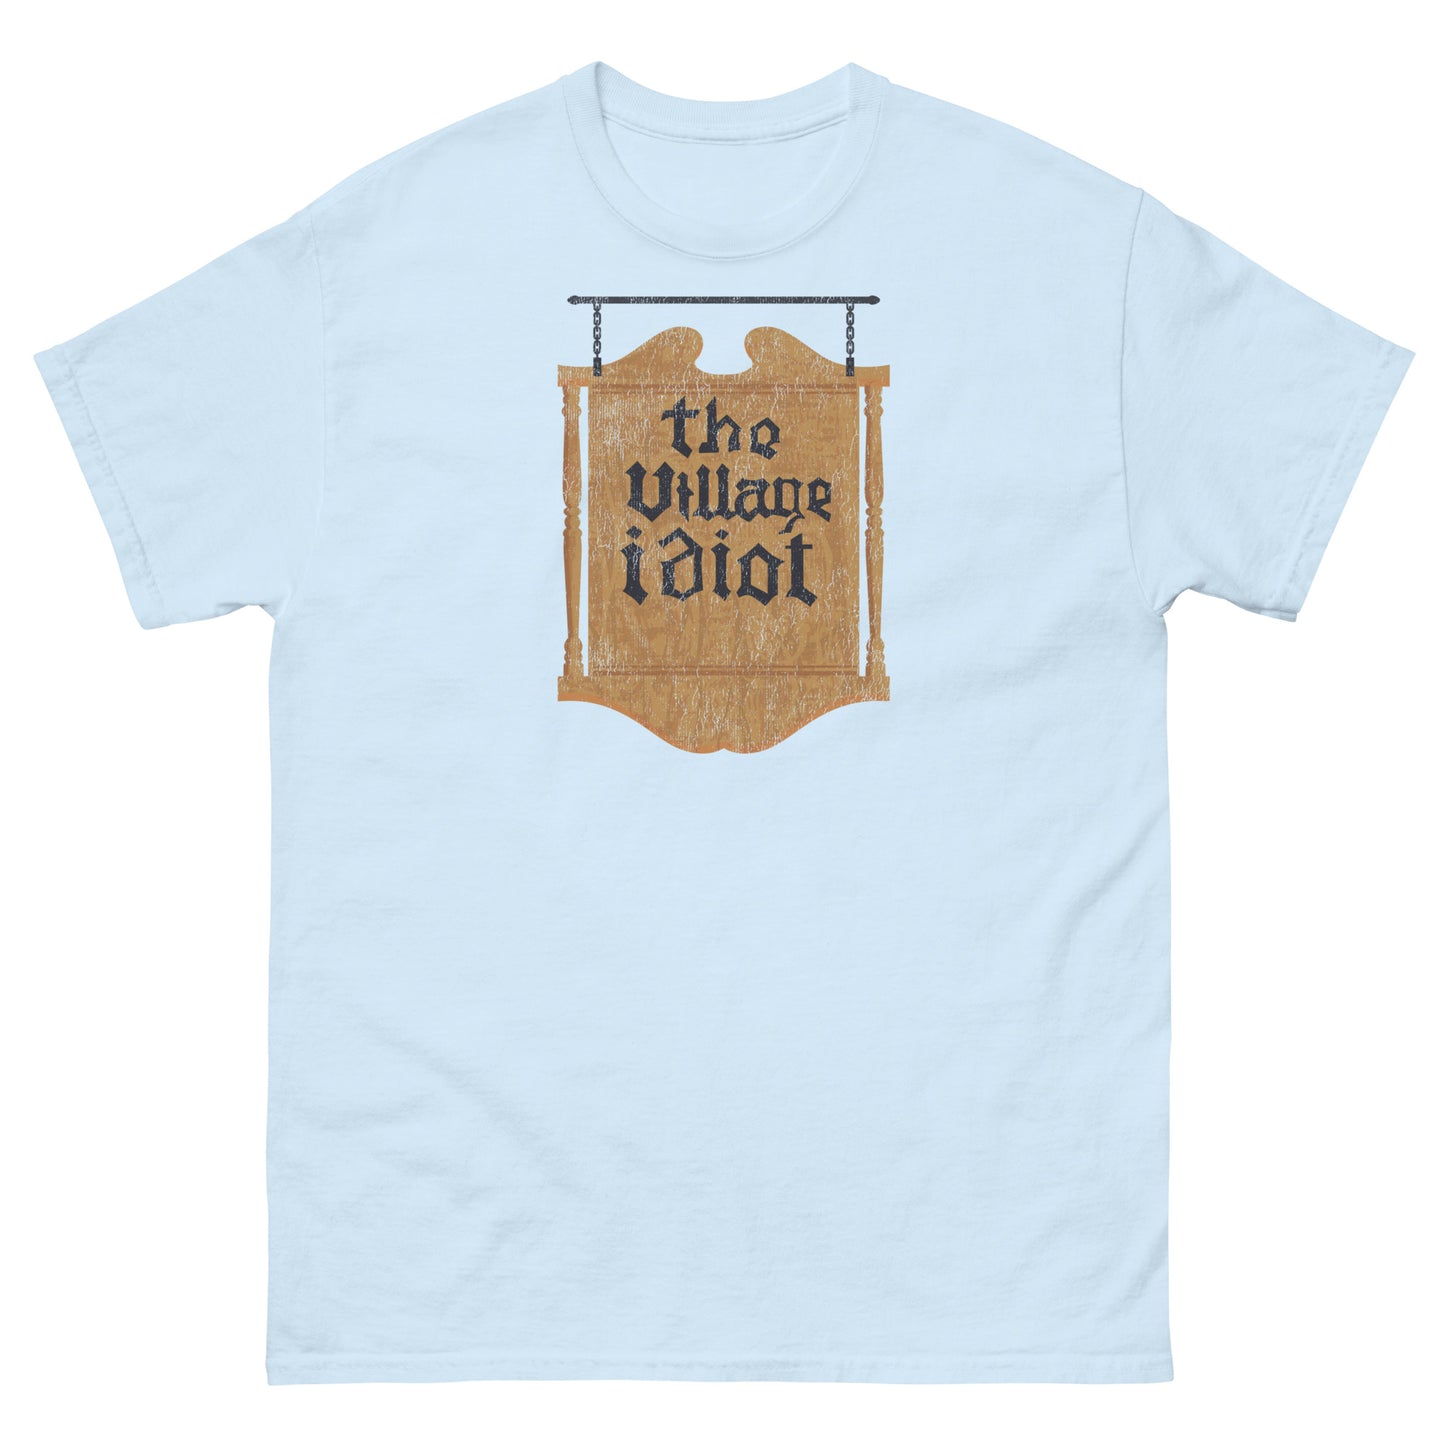 The Village Idiot Bar T-Shirt - Standard